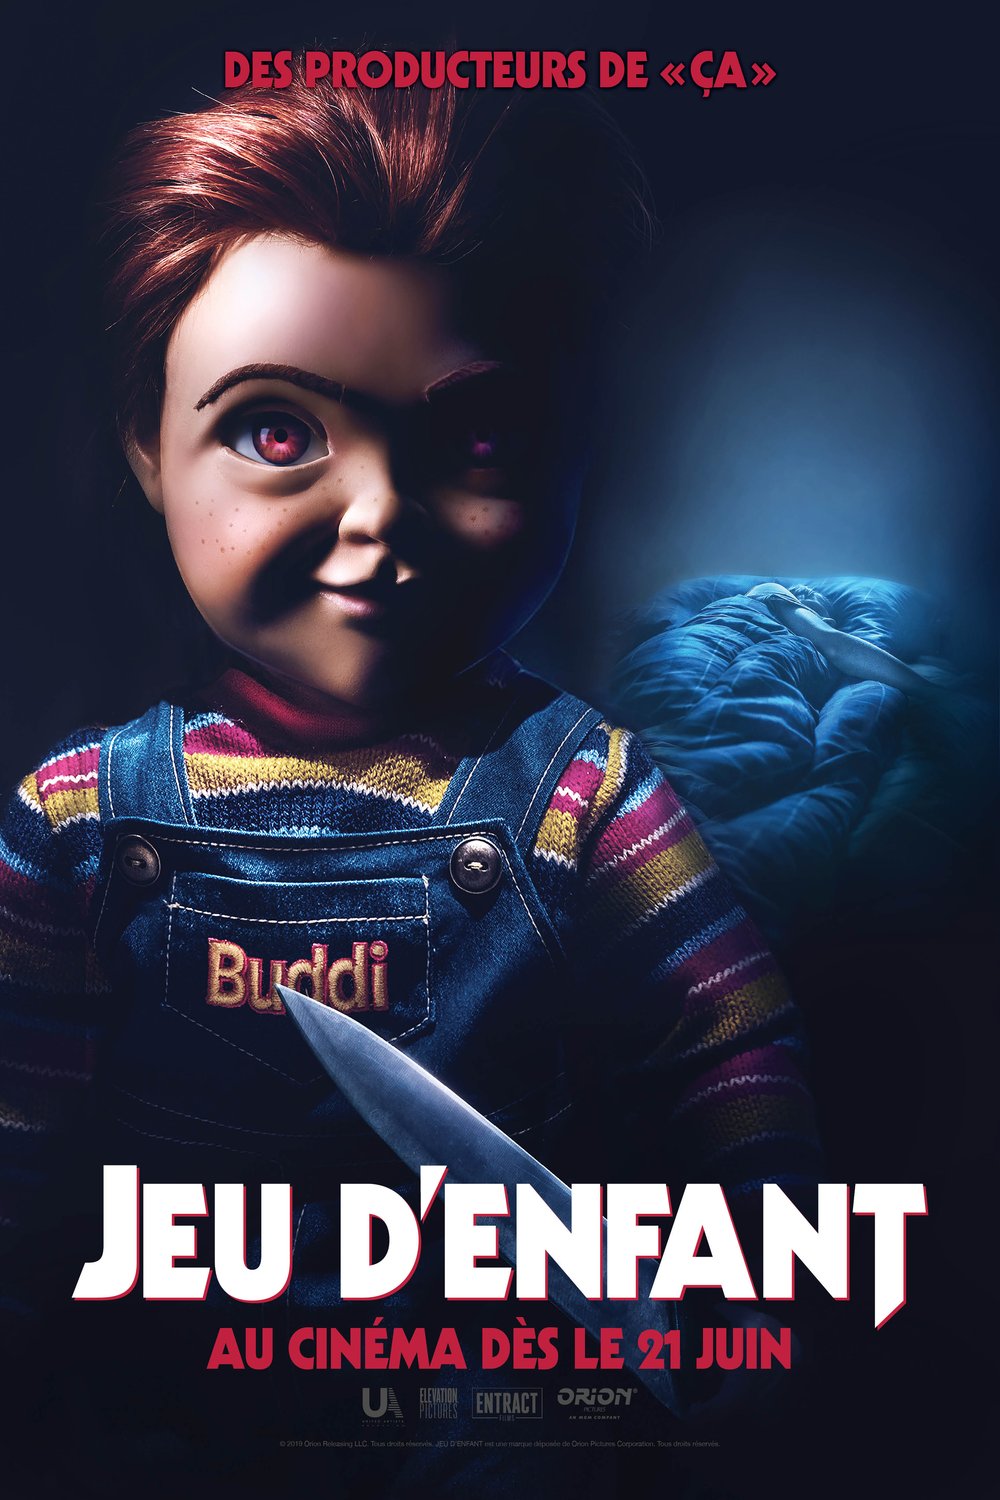 Poster of the movie Jeu d'enfant